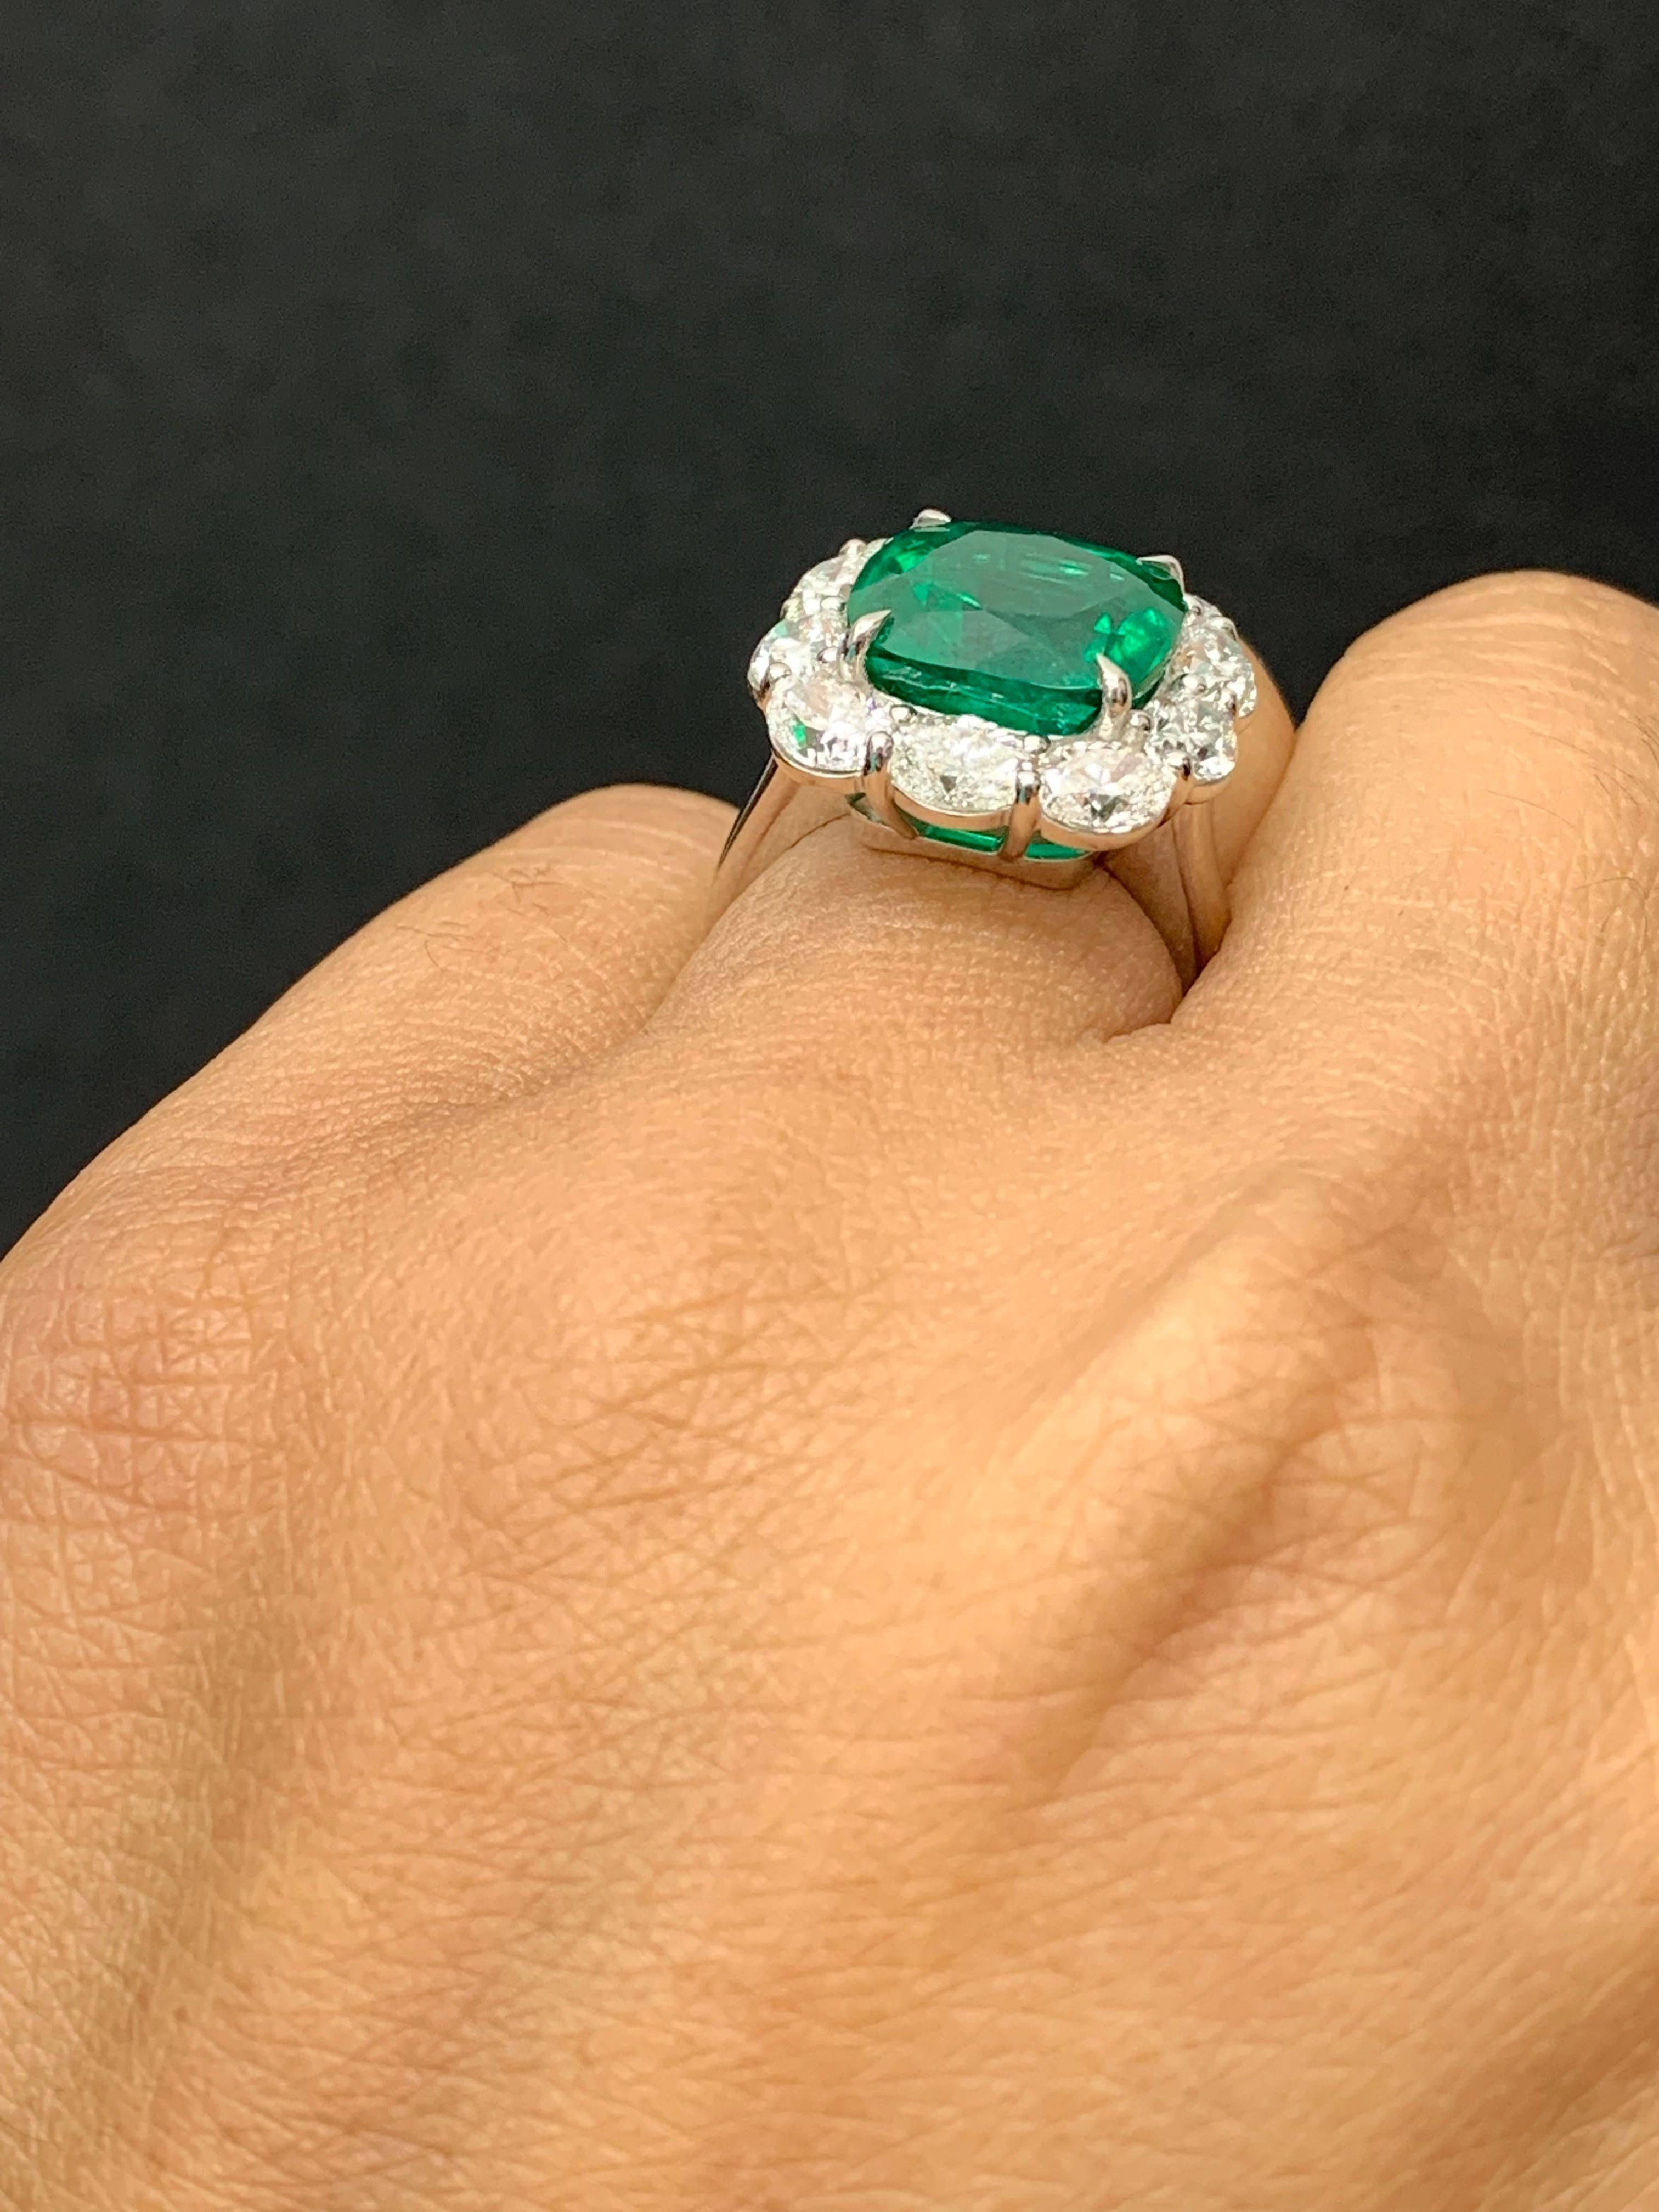 Certified 6.58 Carat Cushion Cut Emerald Diamond Ring in Platinum For Sale 2